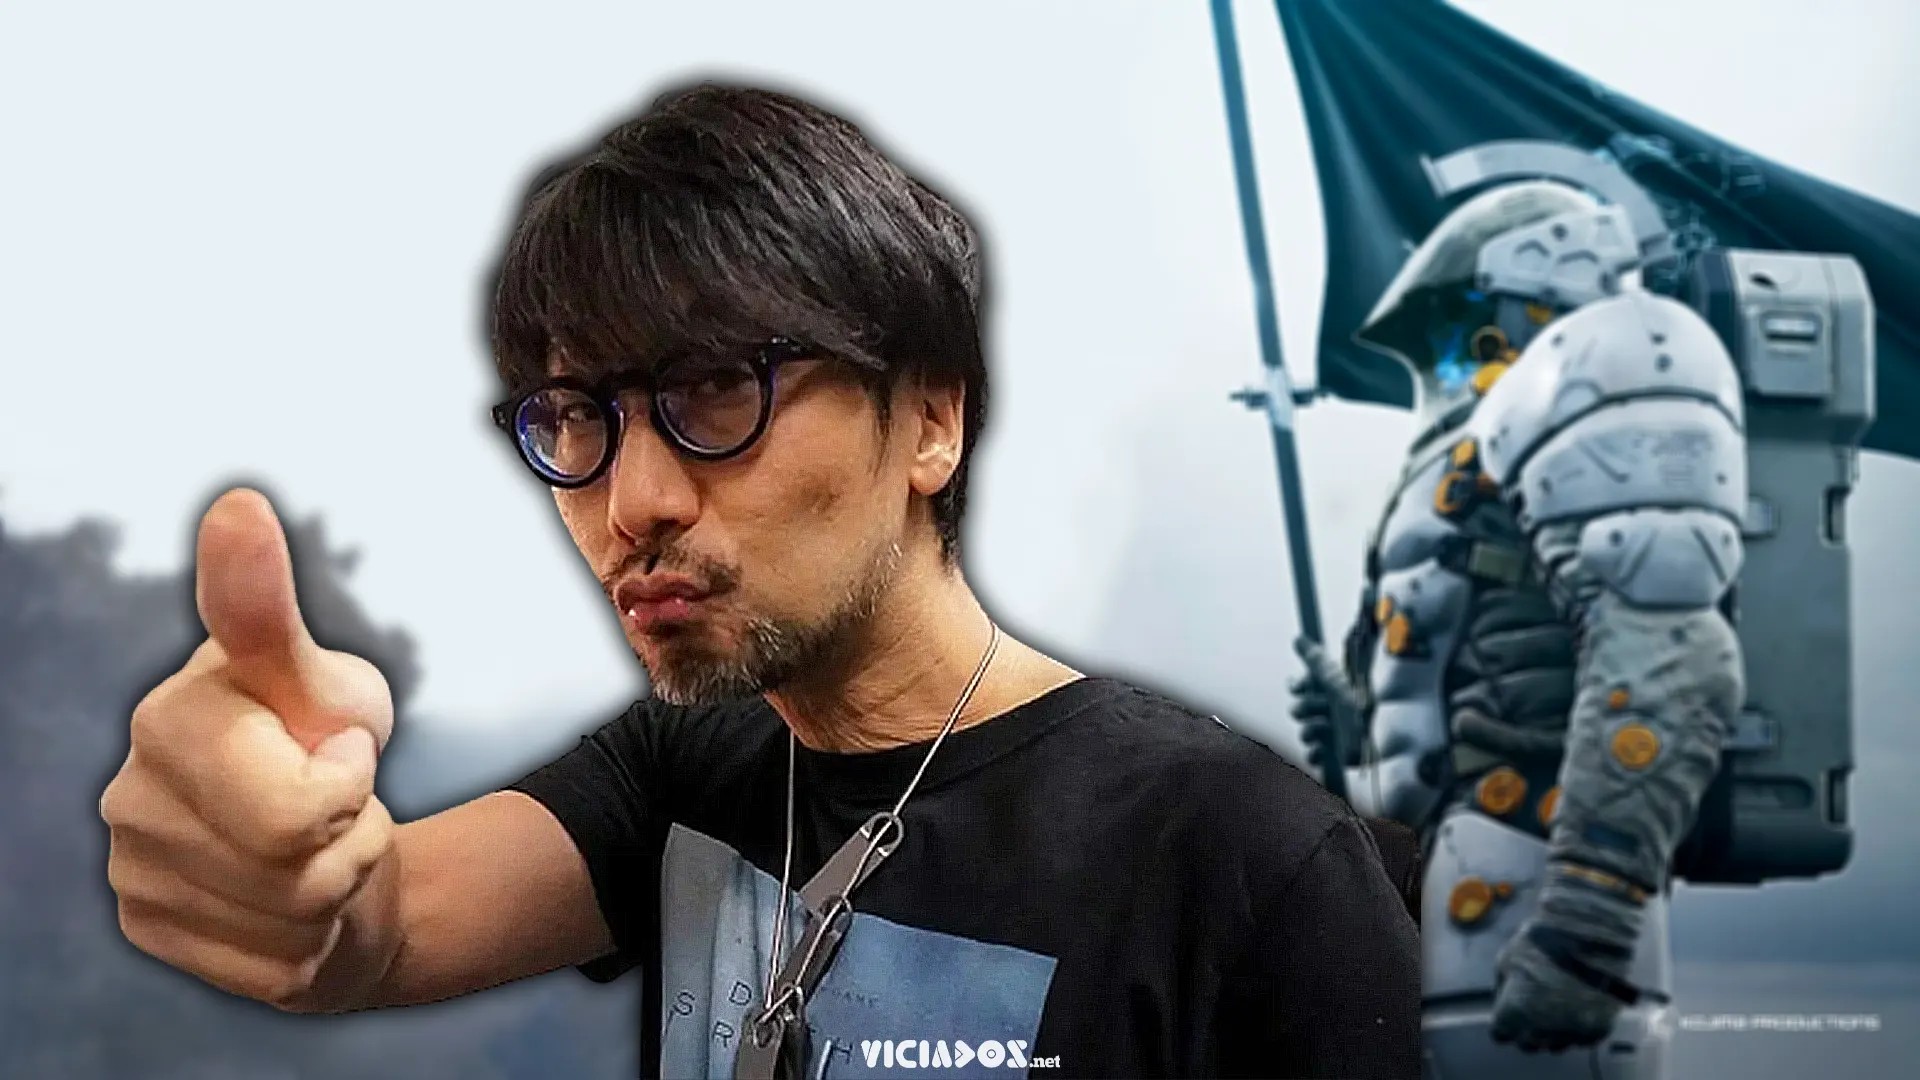 Is this a real Hideo Kojima Twitter account? : r/Kojima